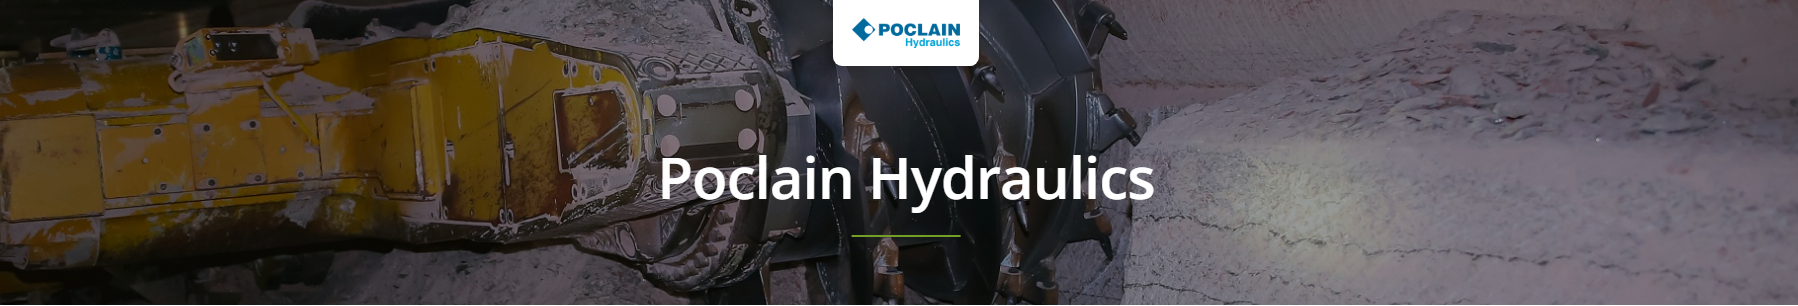 Poclain Hydraulics Valves